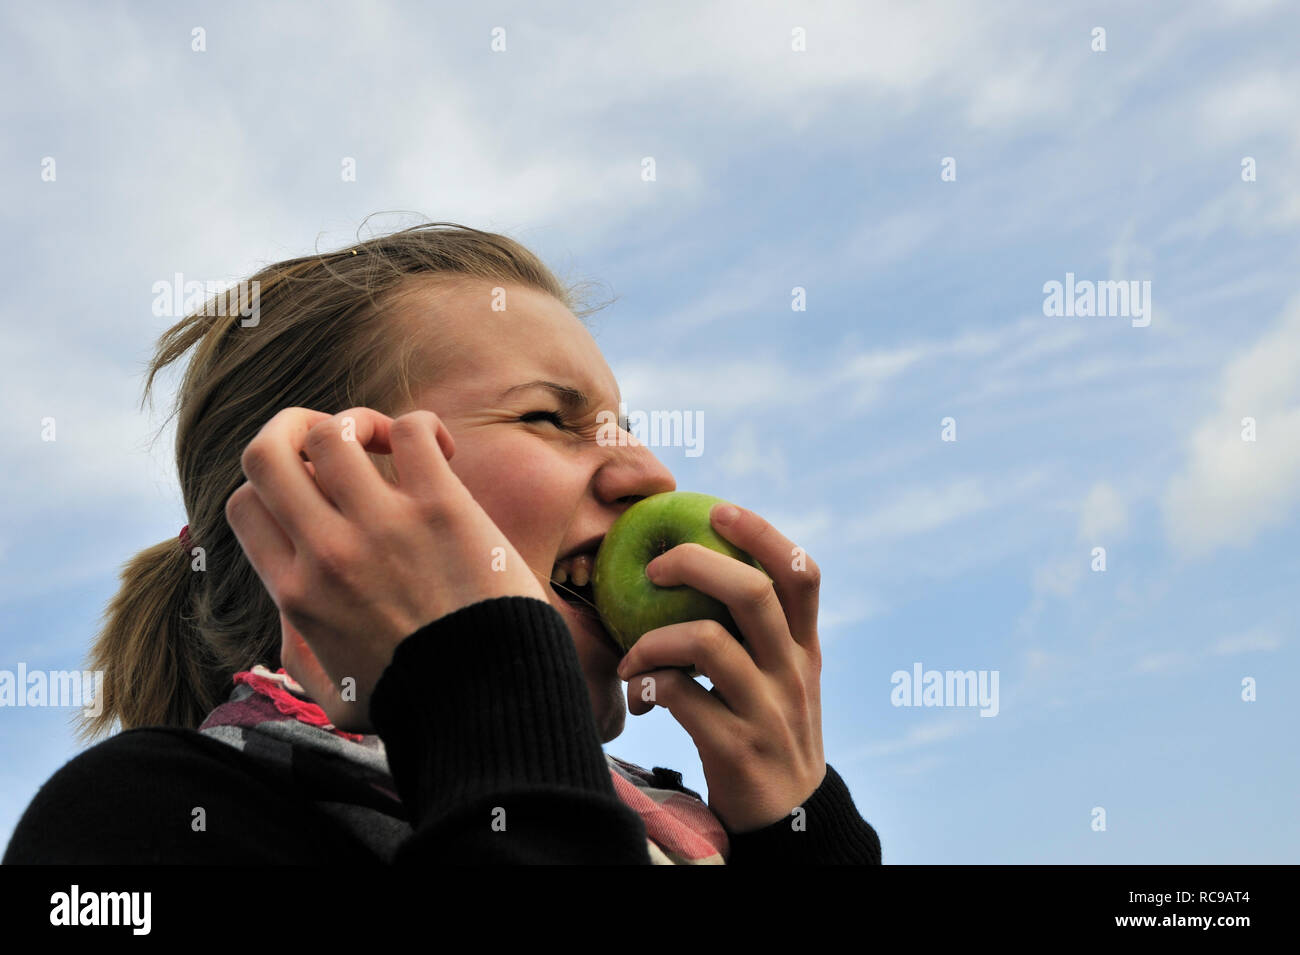 Frau Junge beisst en einen grünen Apfel - in den Apfel beissen sauren | joven comiendo una manzana verde - para tragar una píldora amarga o sujete la natt Foto de stock